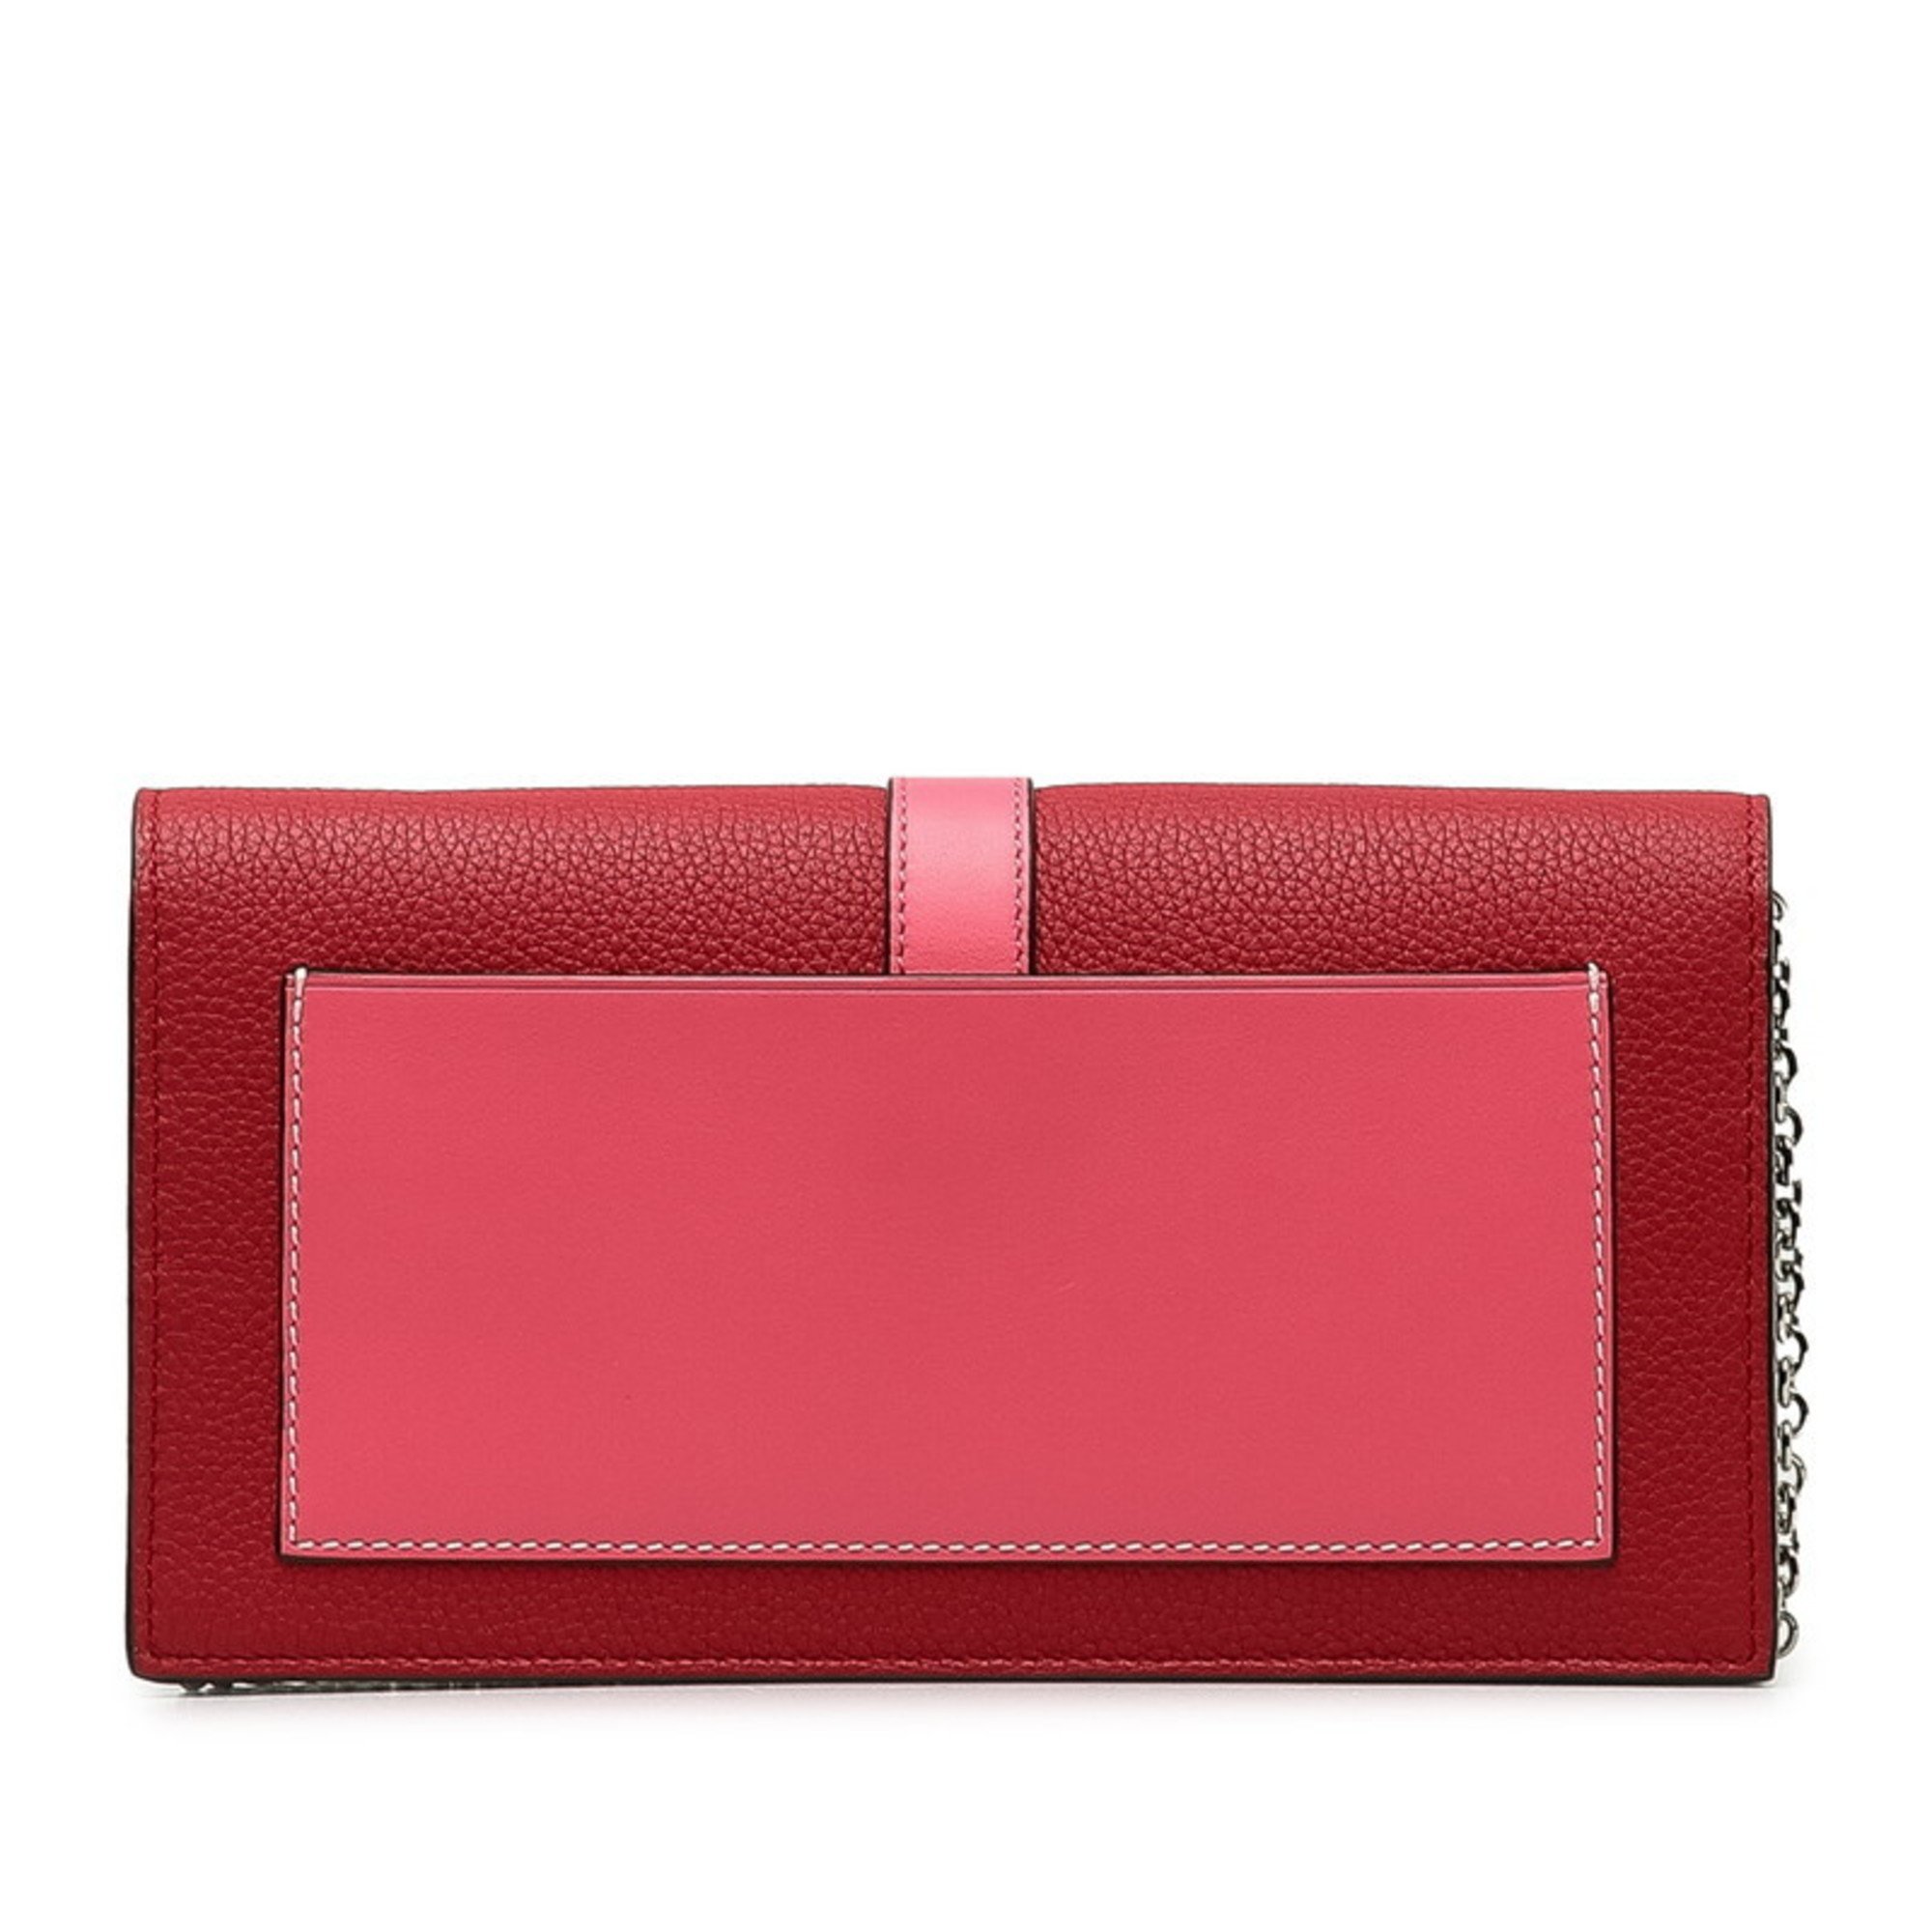 LOEWE Anagram Chain Wallet Shoulder Bag Wine Red Pink Leather Women's